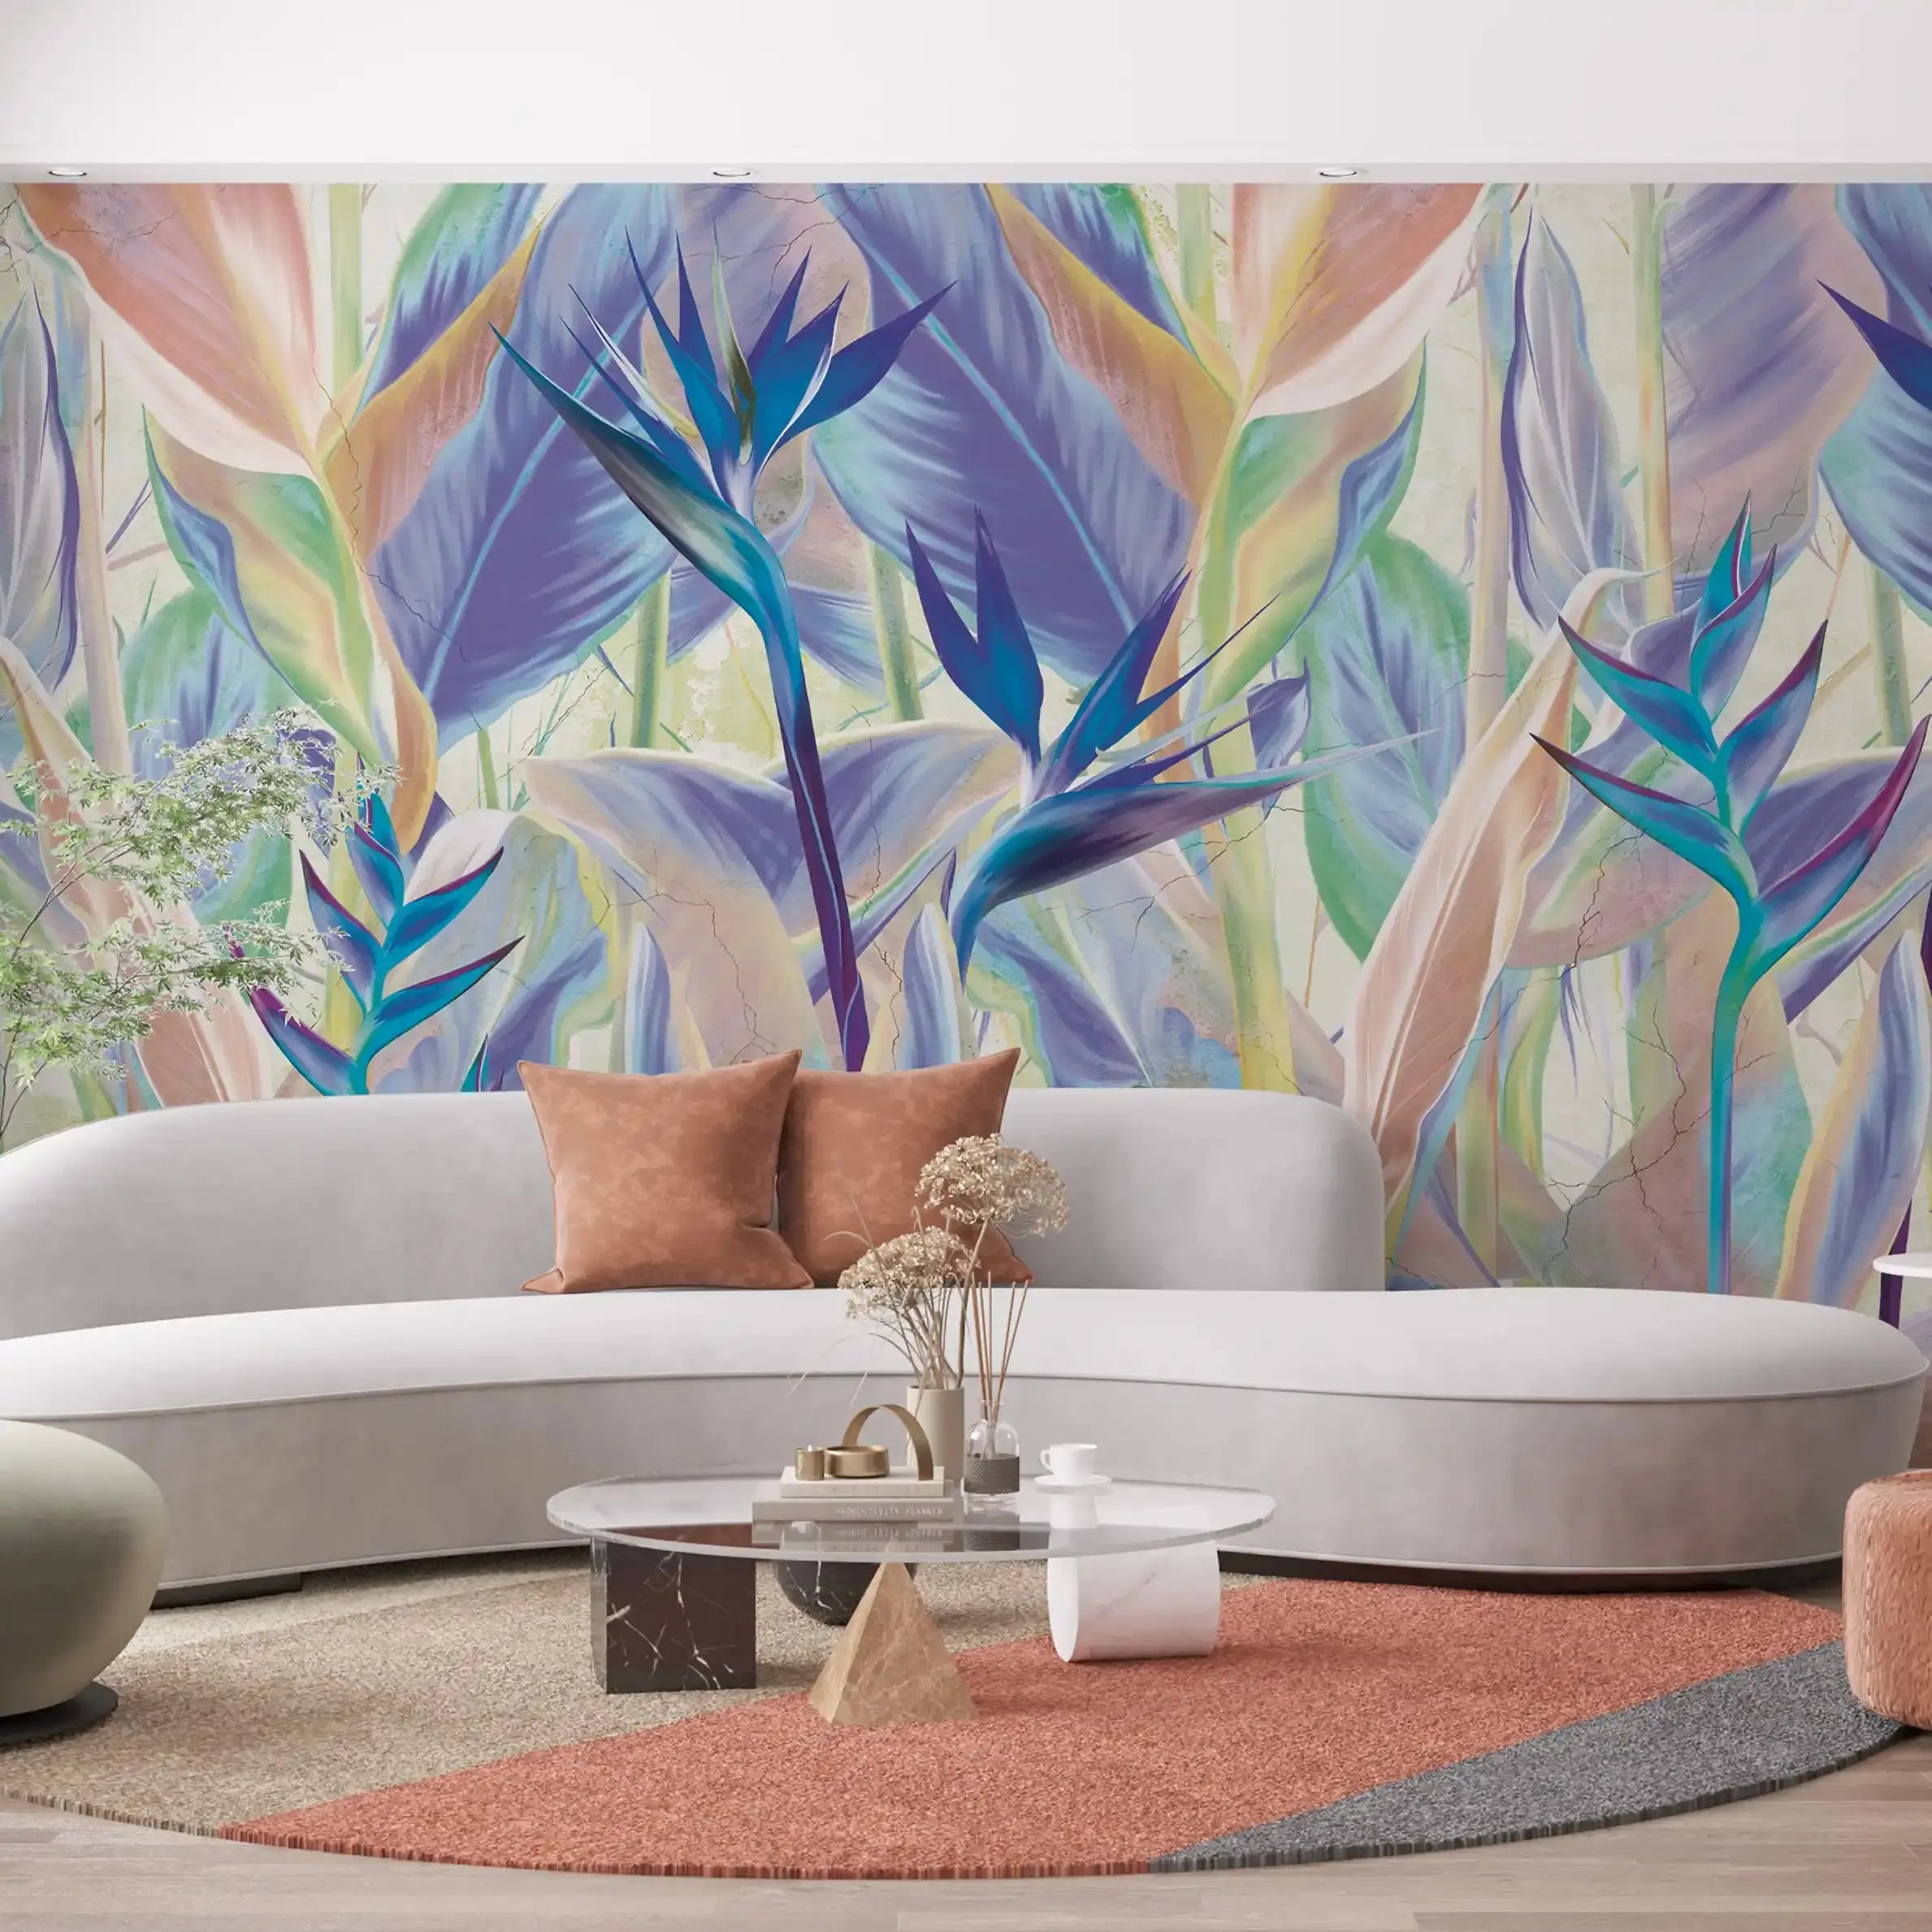 3006-C / Peel and Stick Botanical Wallpaper - Bird of Paradise Design, Easy Install Wall Mural - Artevella